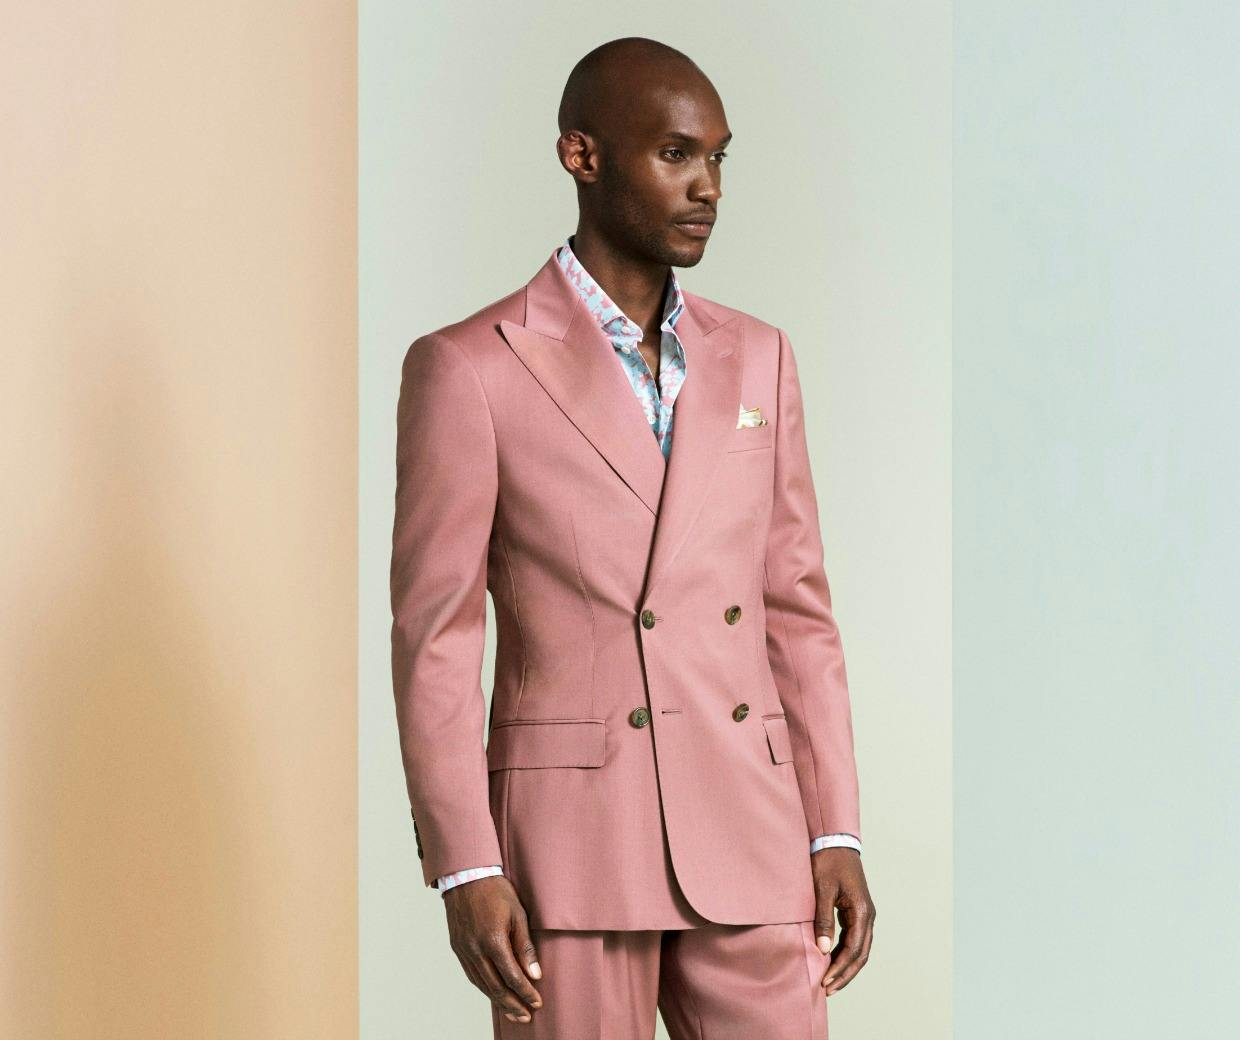 How to choose your tailored suit - Jasper Littman Savile Row Tailor